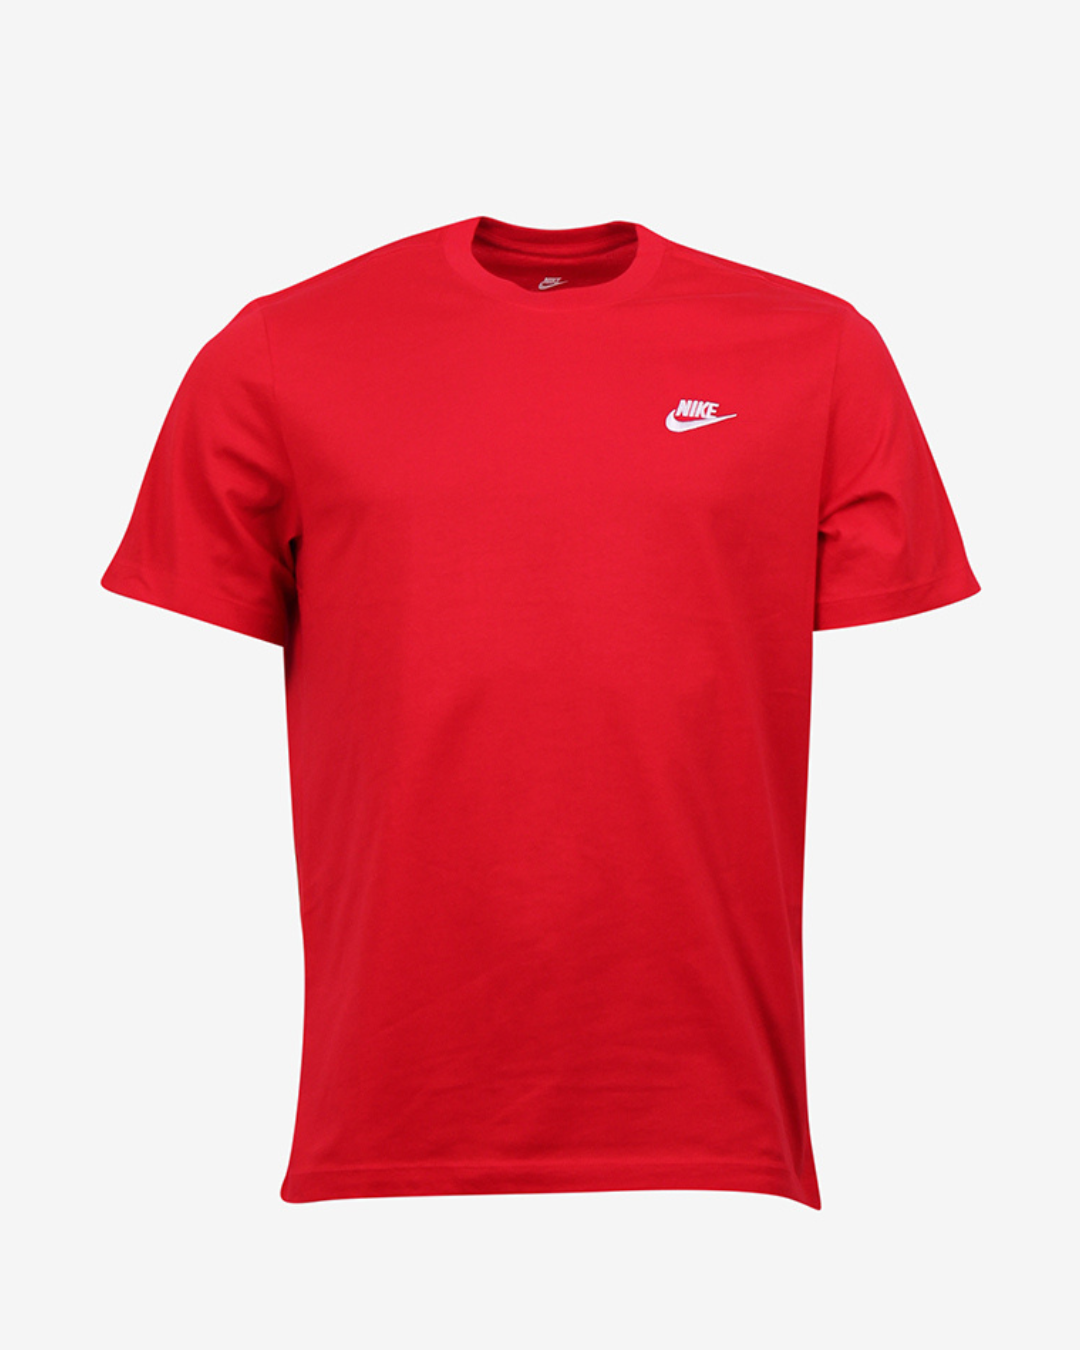 Nike Club t-shirt - Rød - Str. S - Modish.dk